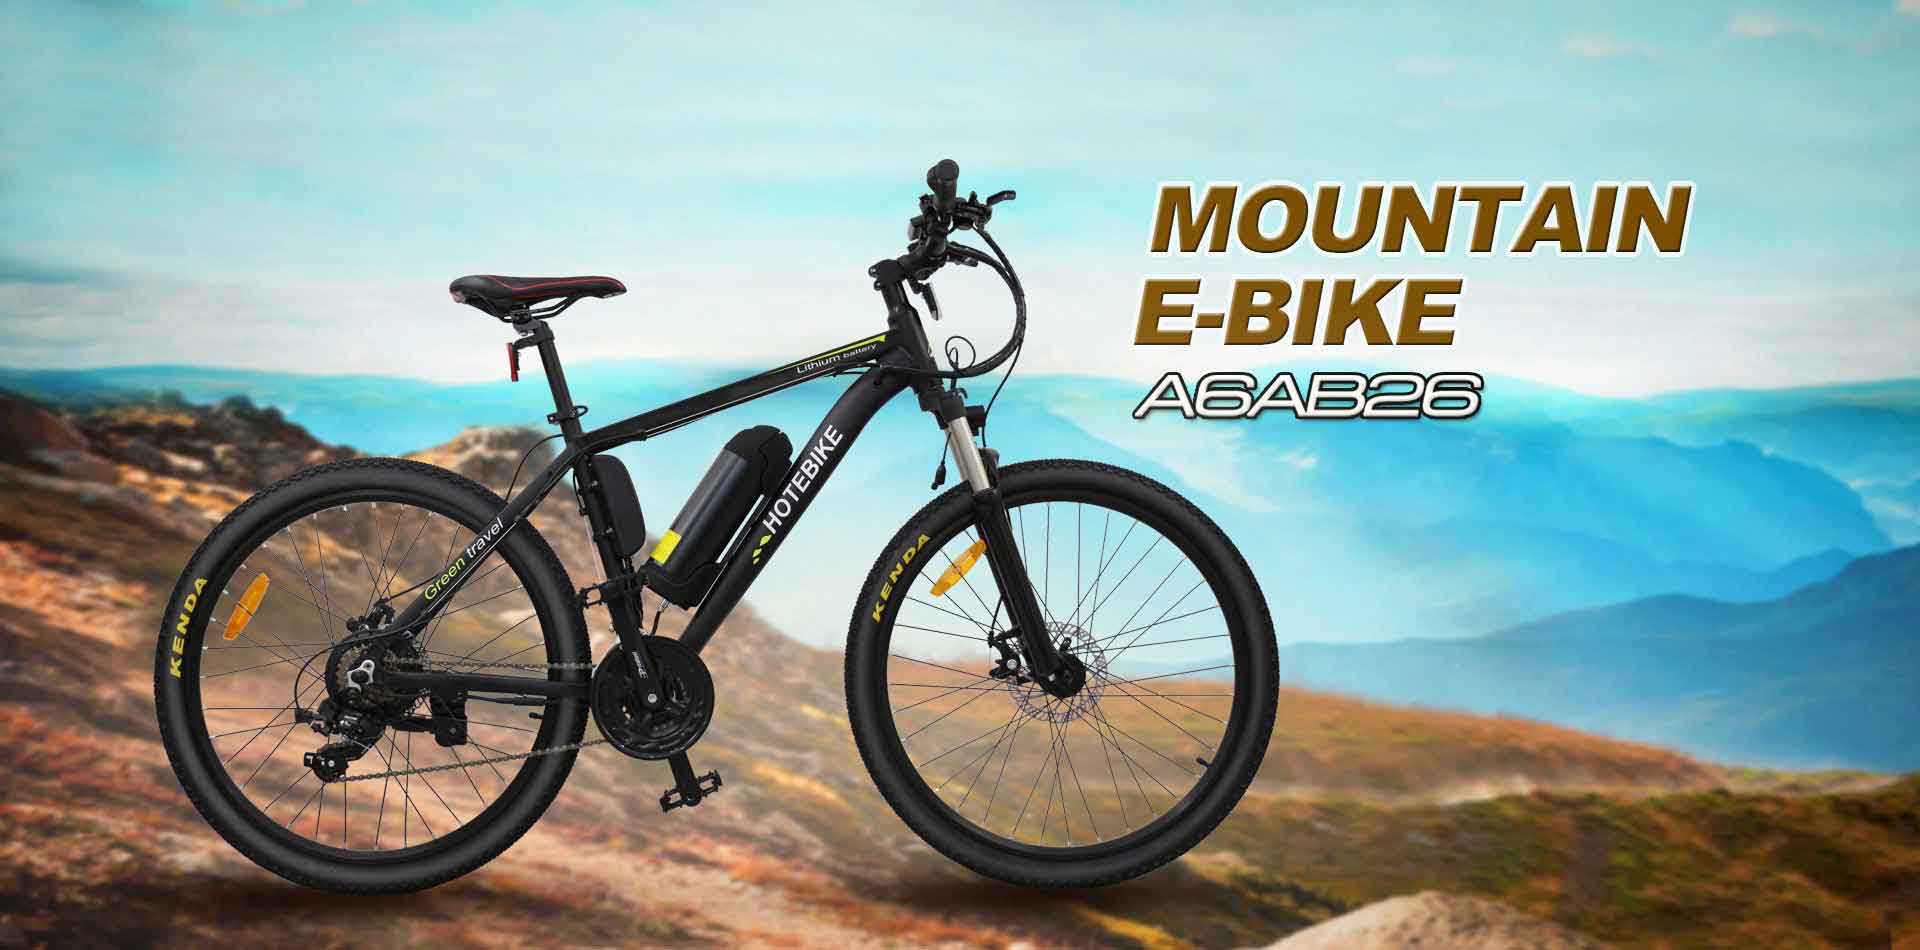 Electric mountain bike instrcution manual - User Manual - 1